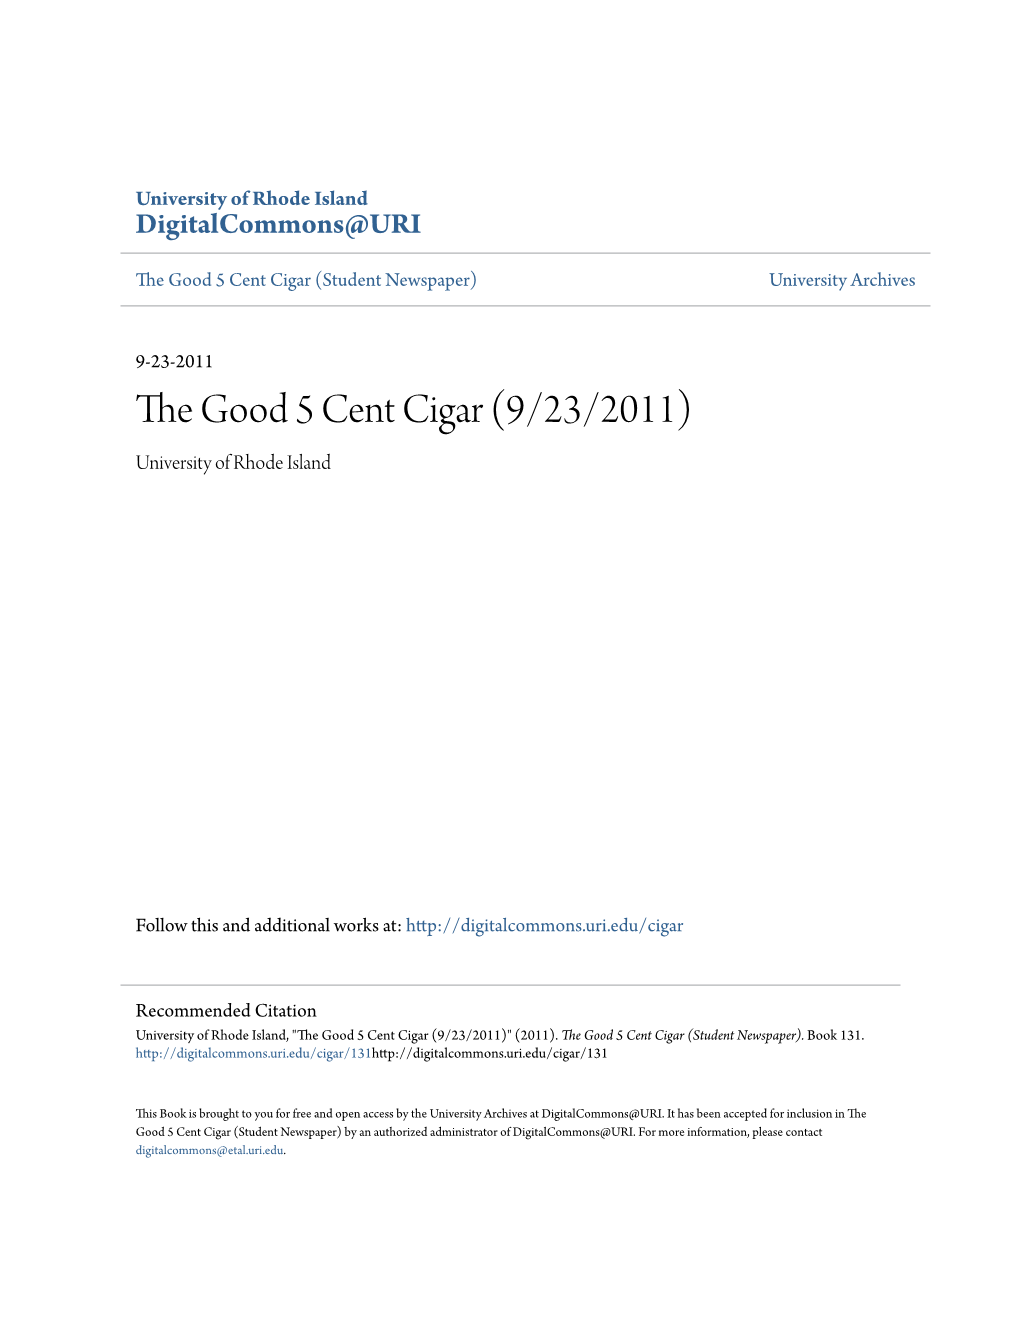 The Good 5 Cent Cigar (9/23/2011) University of Rhode Island